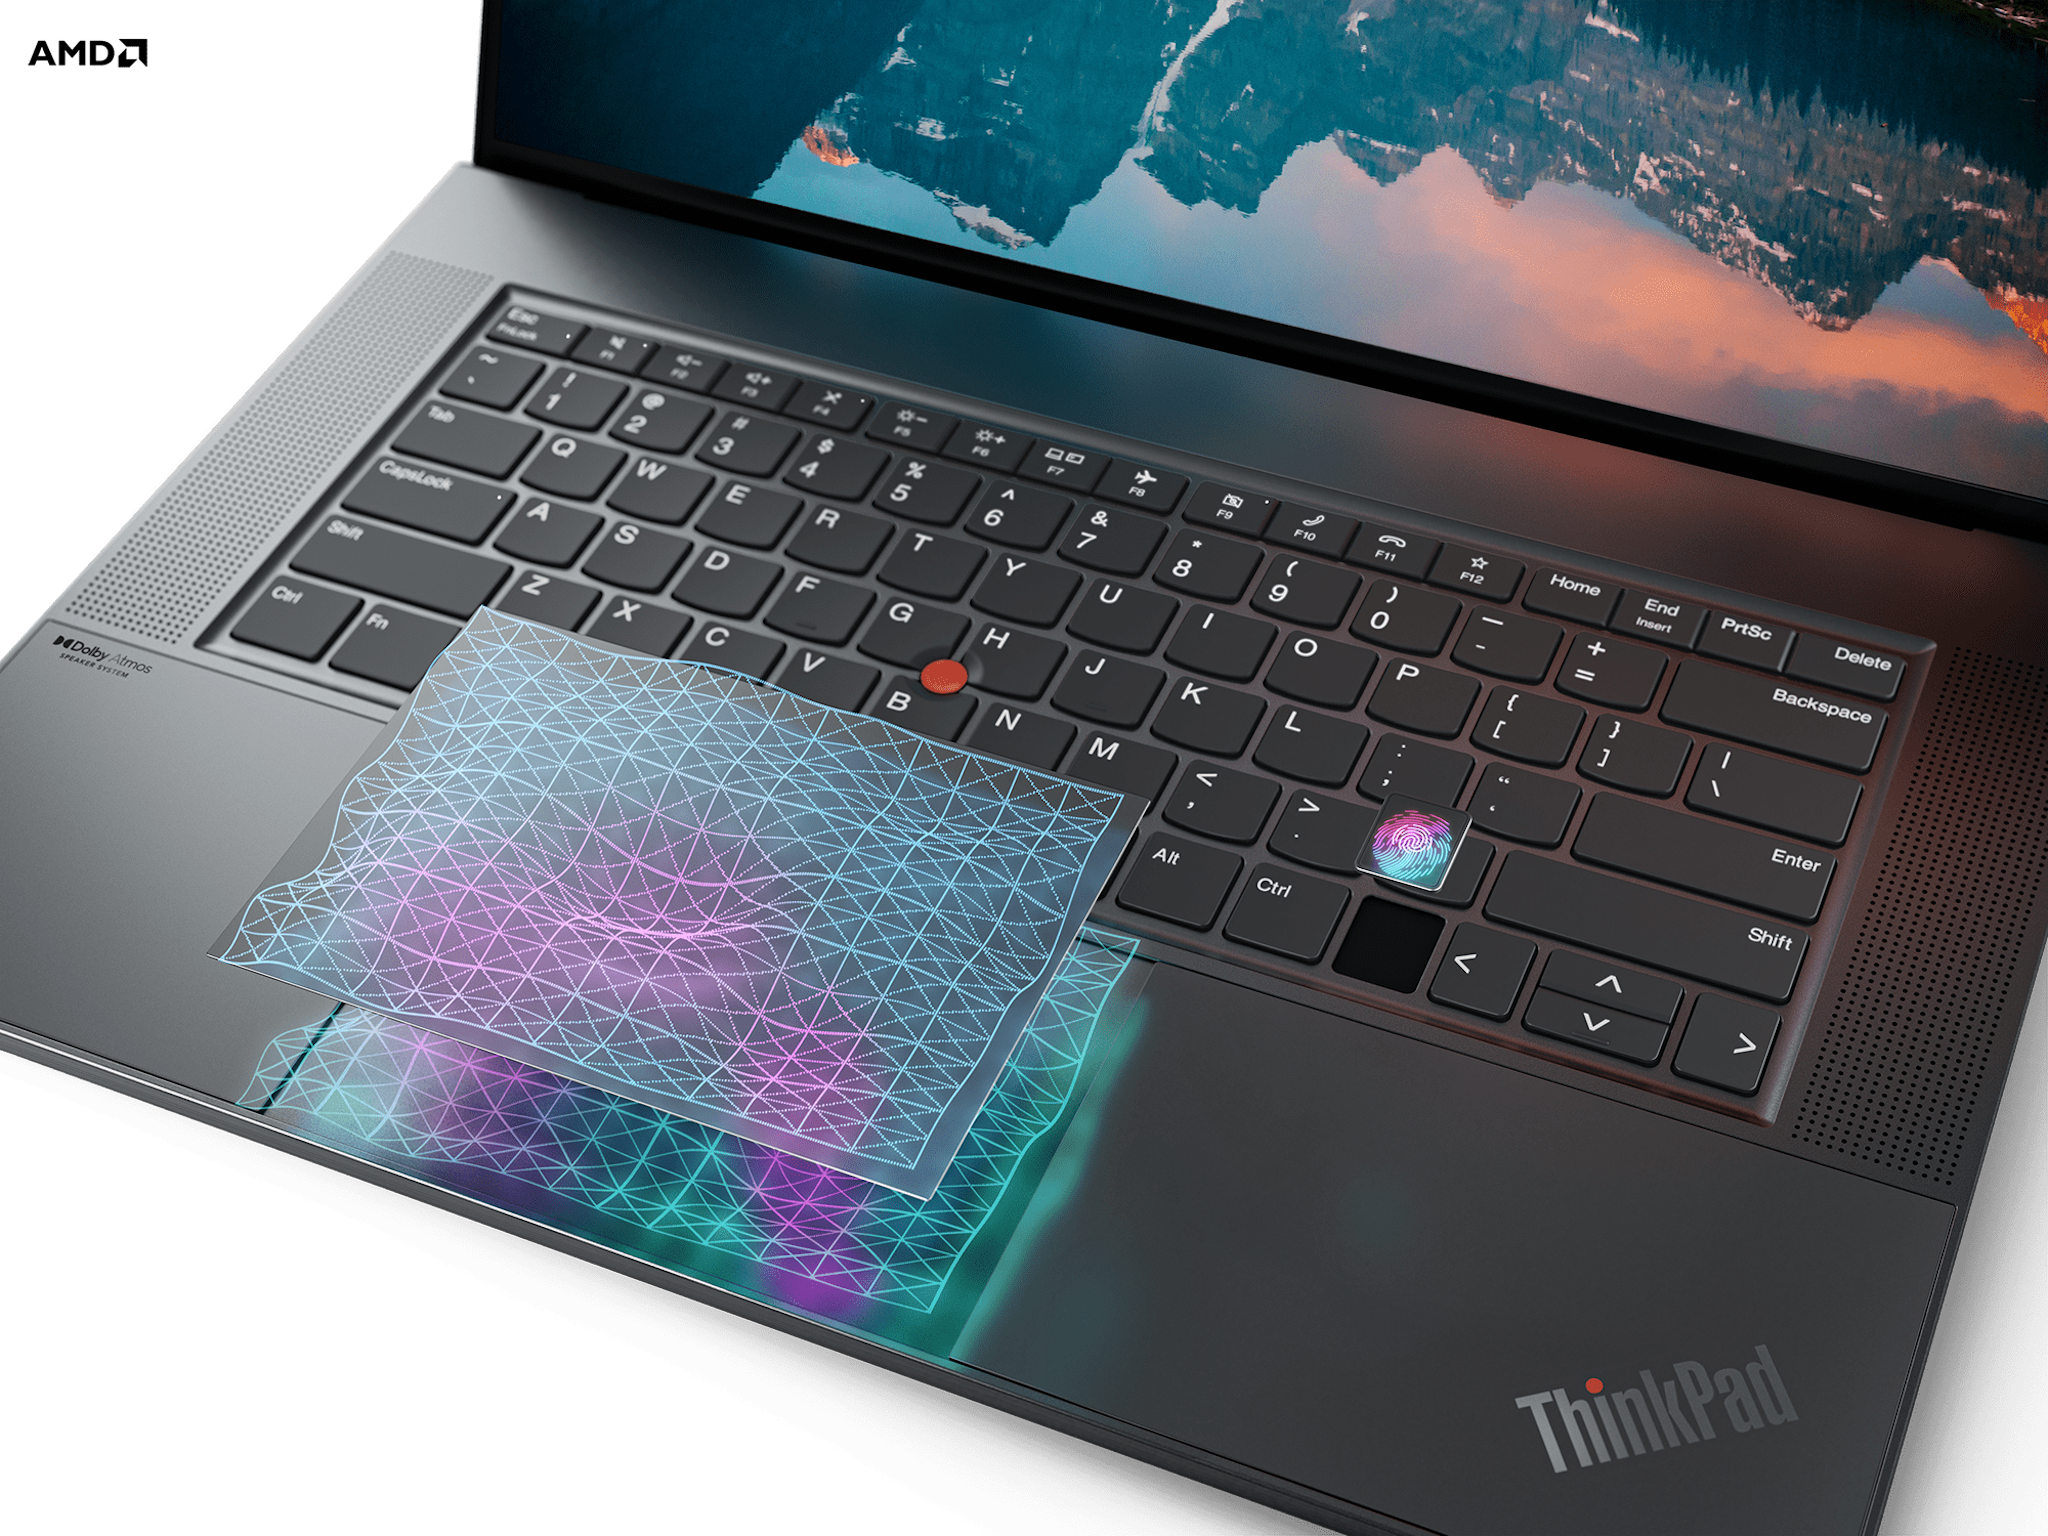 ThinkPad_Z-series-2.png